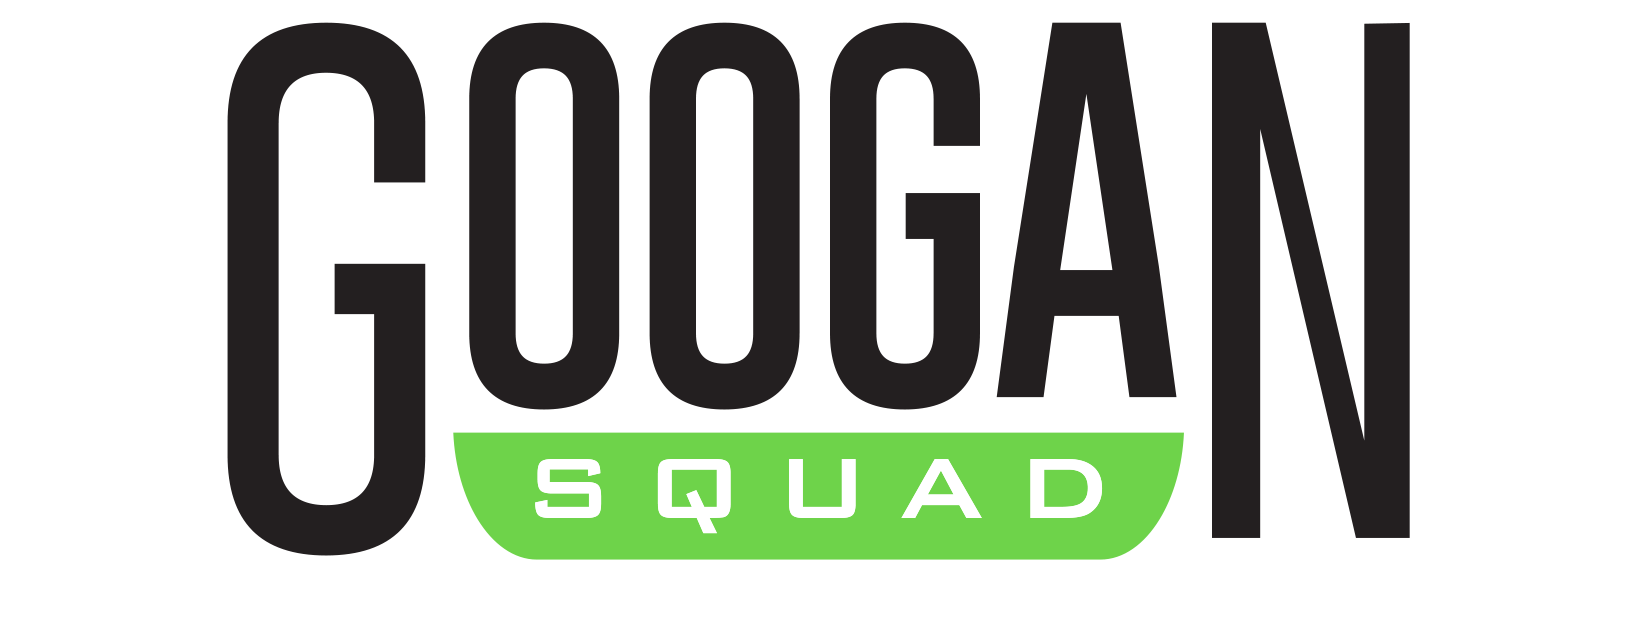 Googan Squad Support logo